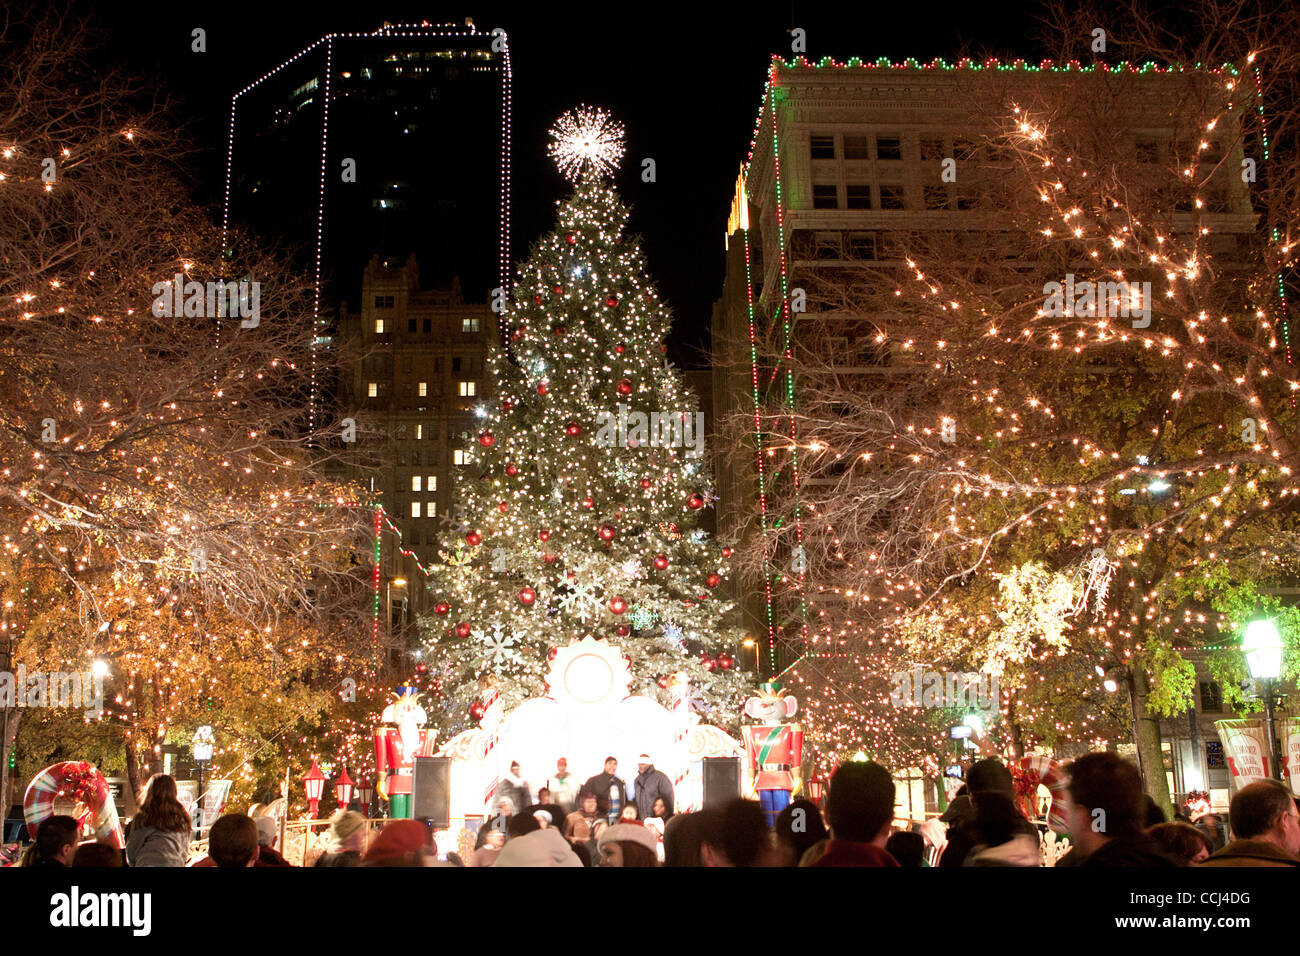 Dec 11, 2010 Fort Worth, Texas, U.S. The Sundance Square Christmas